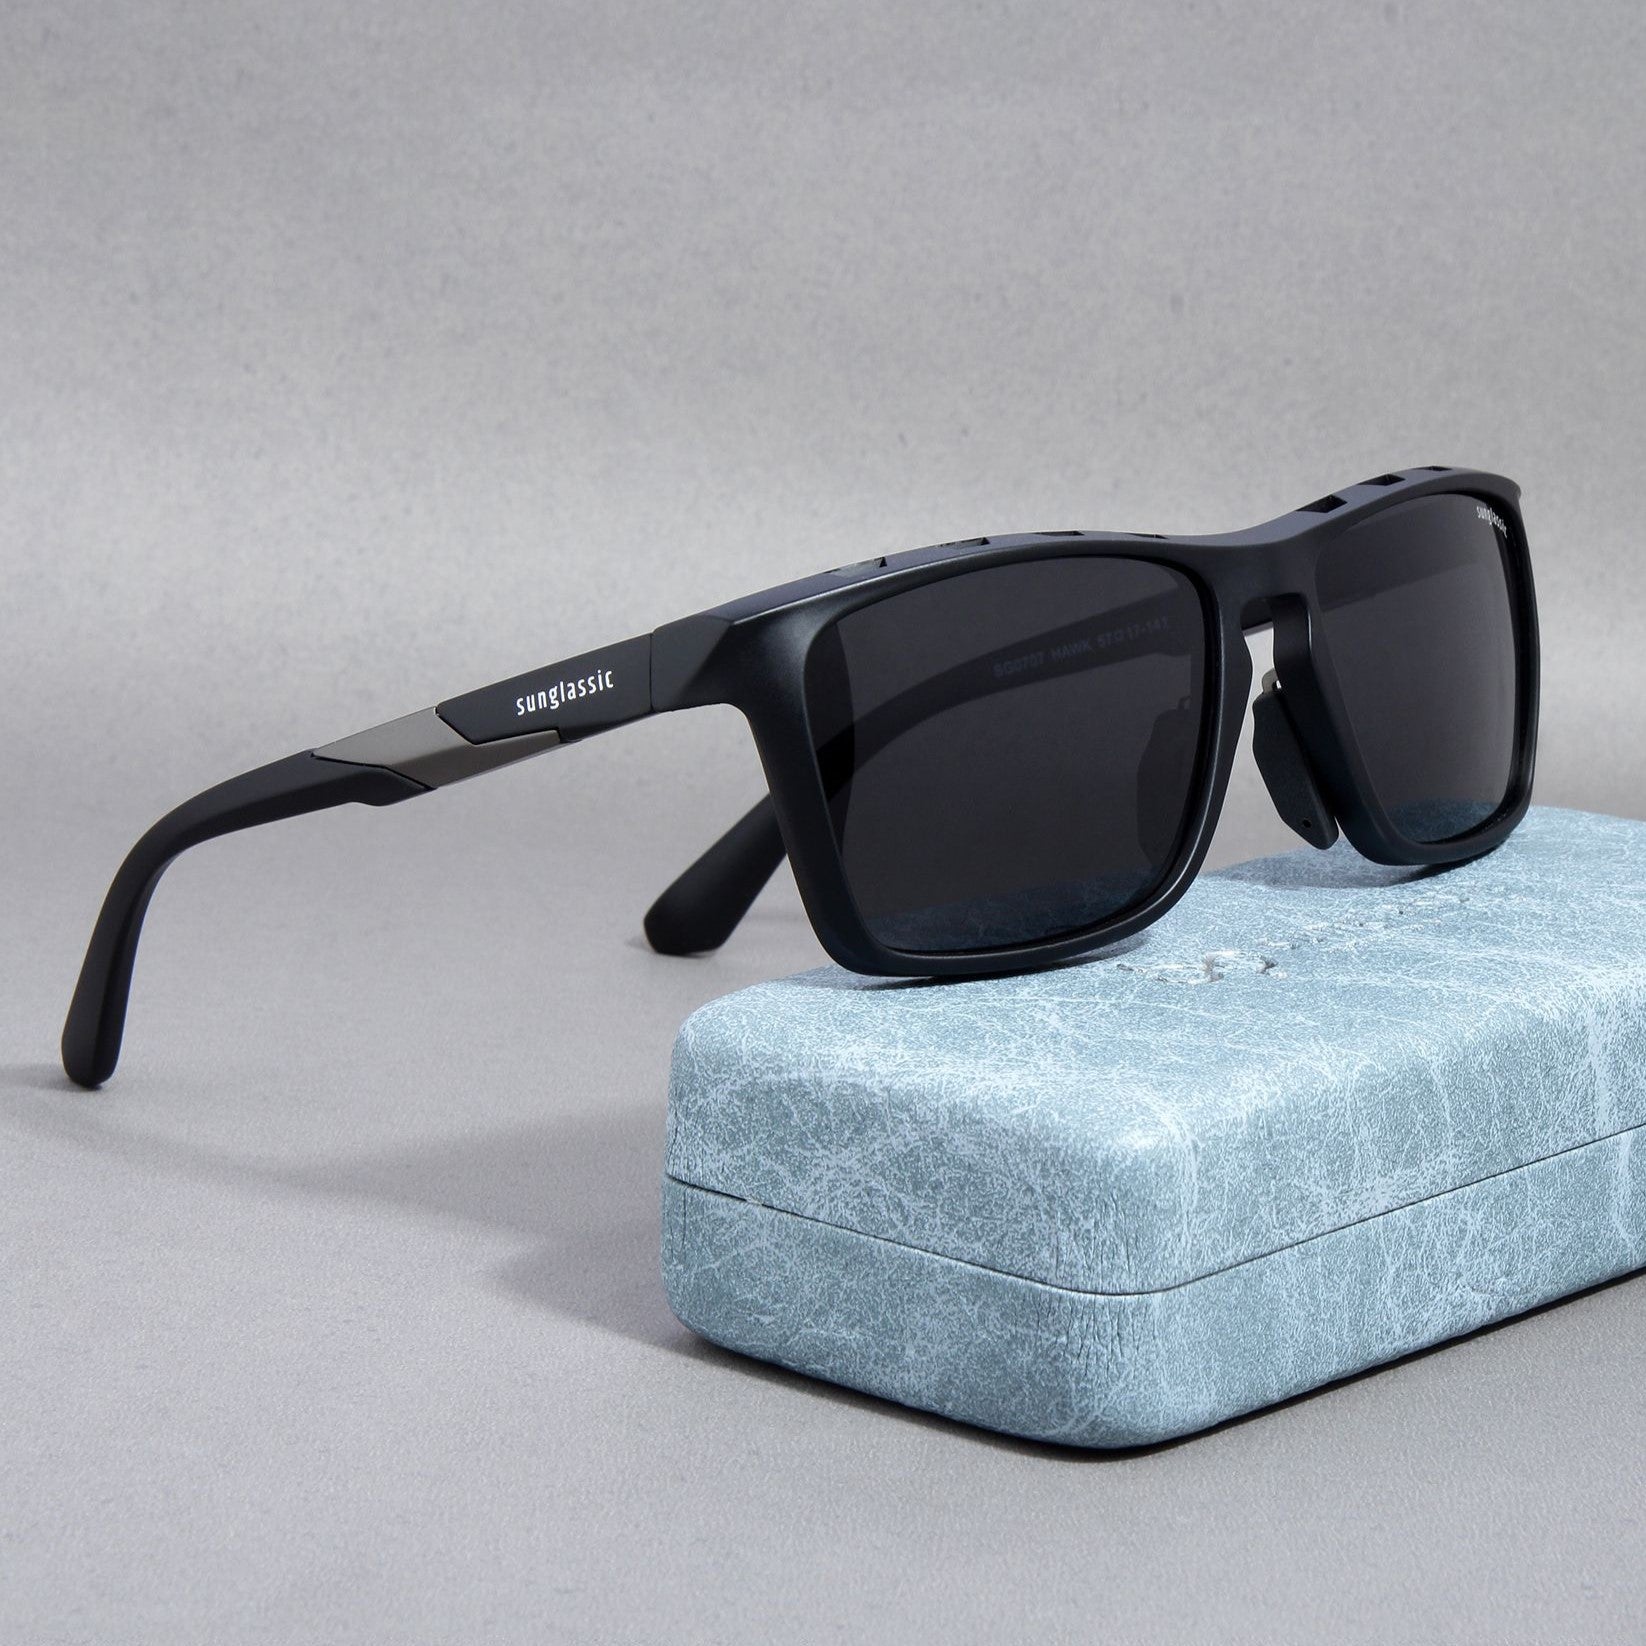 SUNGLASSIC Hawk Black Polarized Rectangle TR90 Sunglasses - Lightweight eyewear for style and performance.